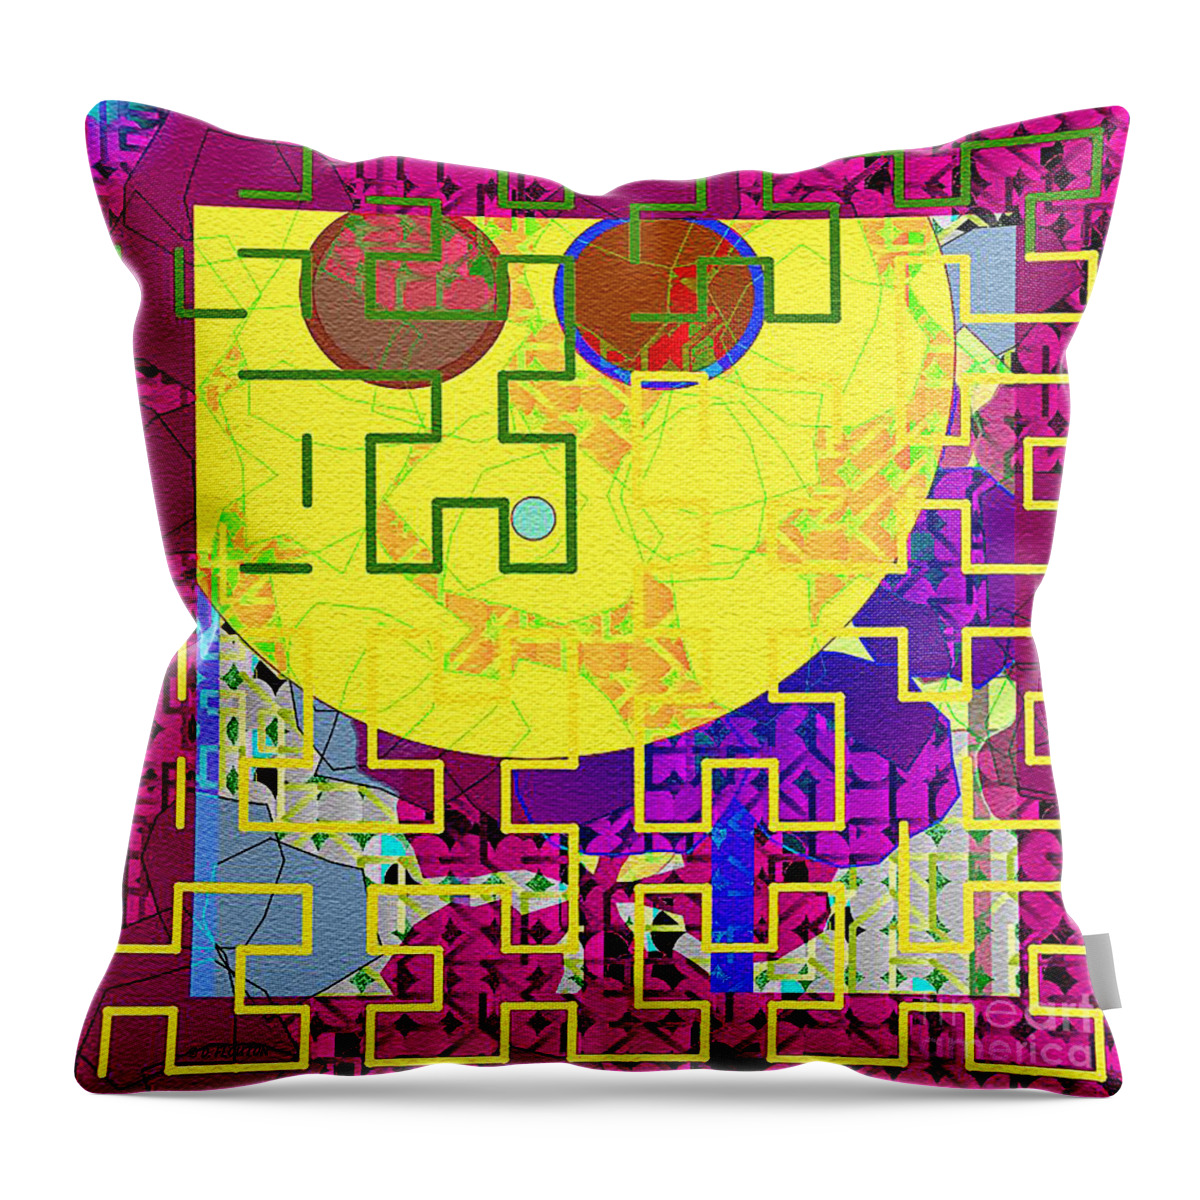 Ebsq Throw Pillow featuring the digital art Yellow Face Maze by Dee Flouton